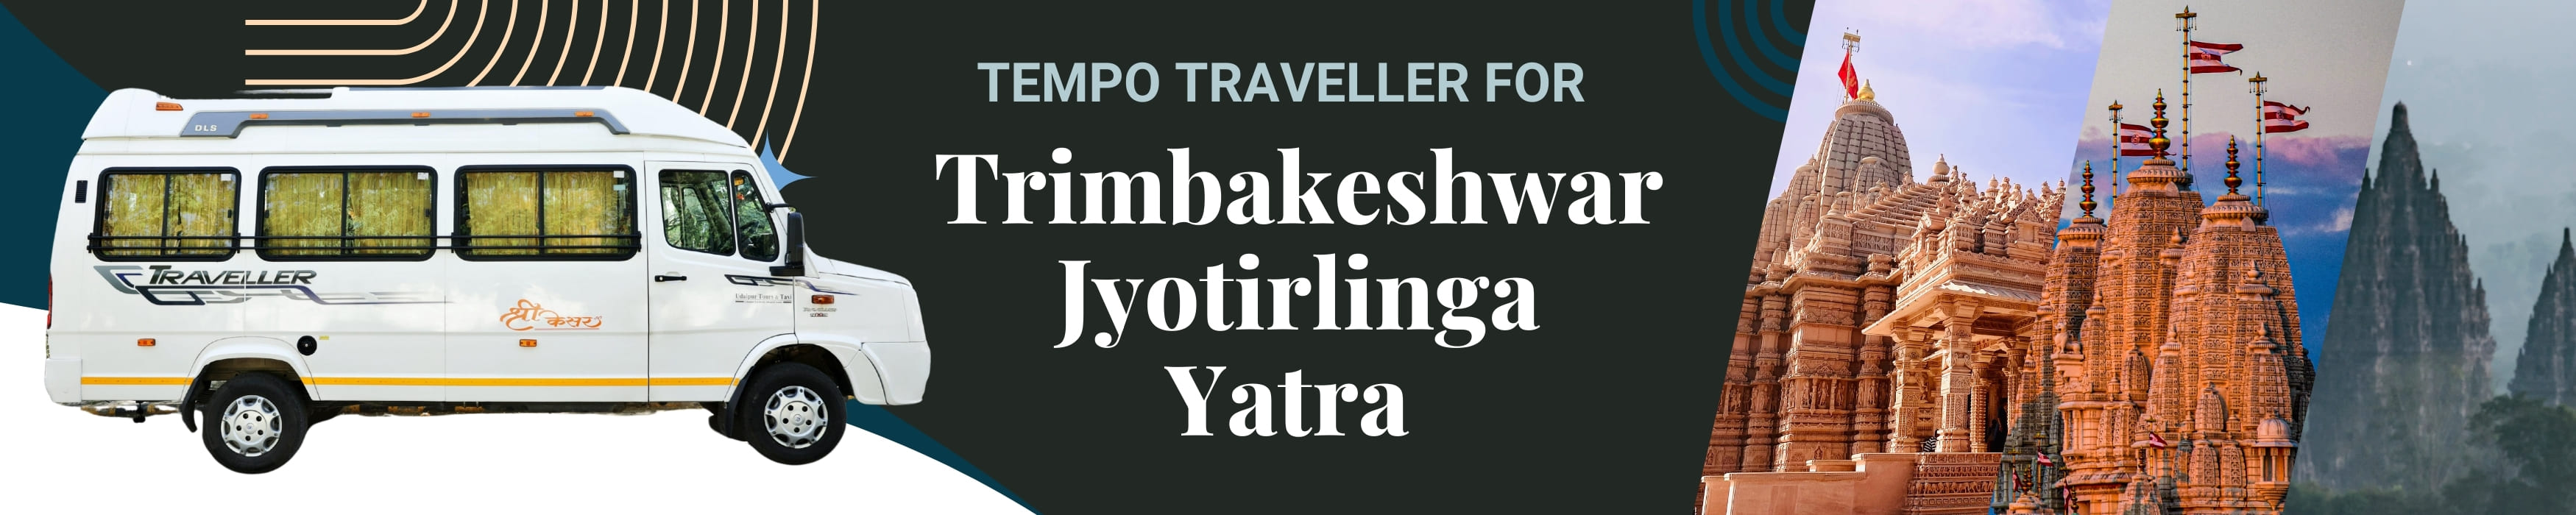 Tempo Traveller For Trimbakeshwar Jyotirlinga Yatra 